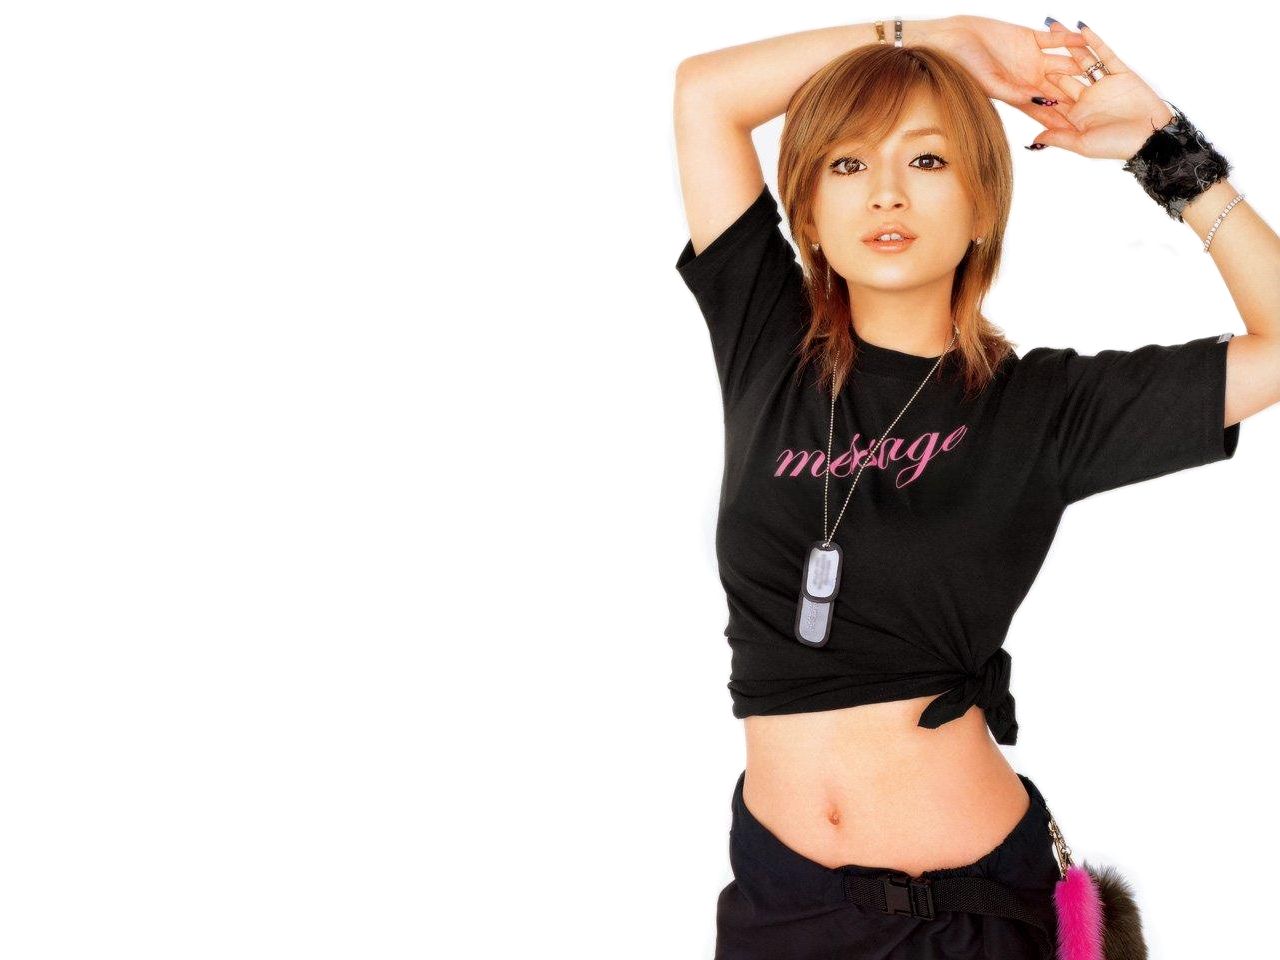 Hot Pictures Of Ayumi Hamasaki - Ayumi Hamasaki Wallpaper Index - HD Wallpaper 